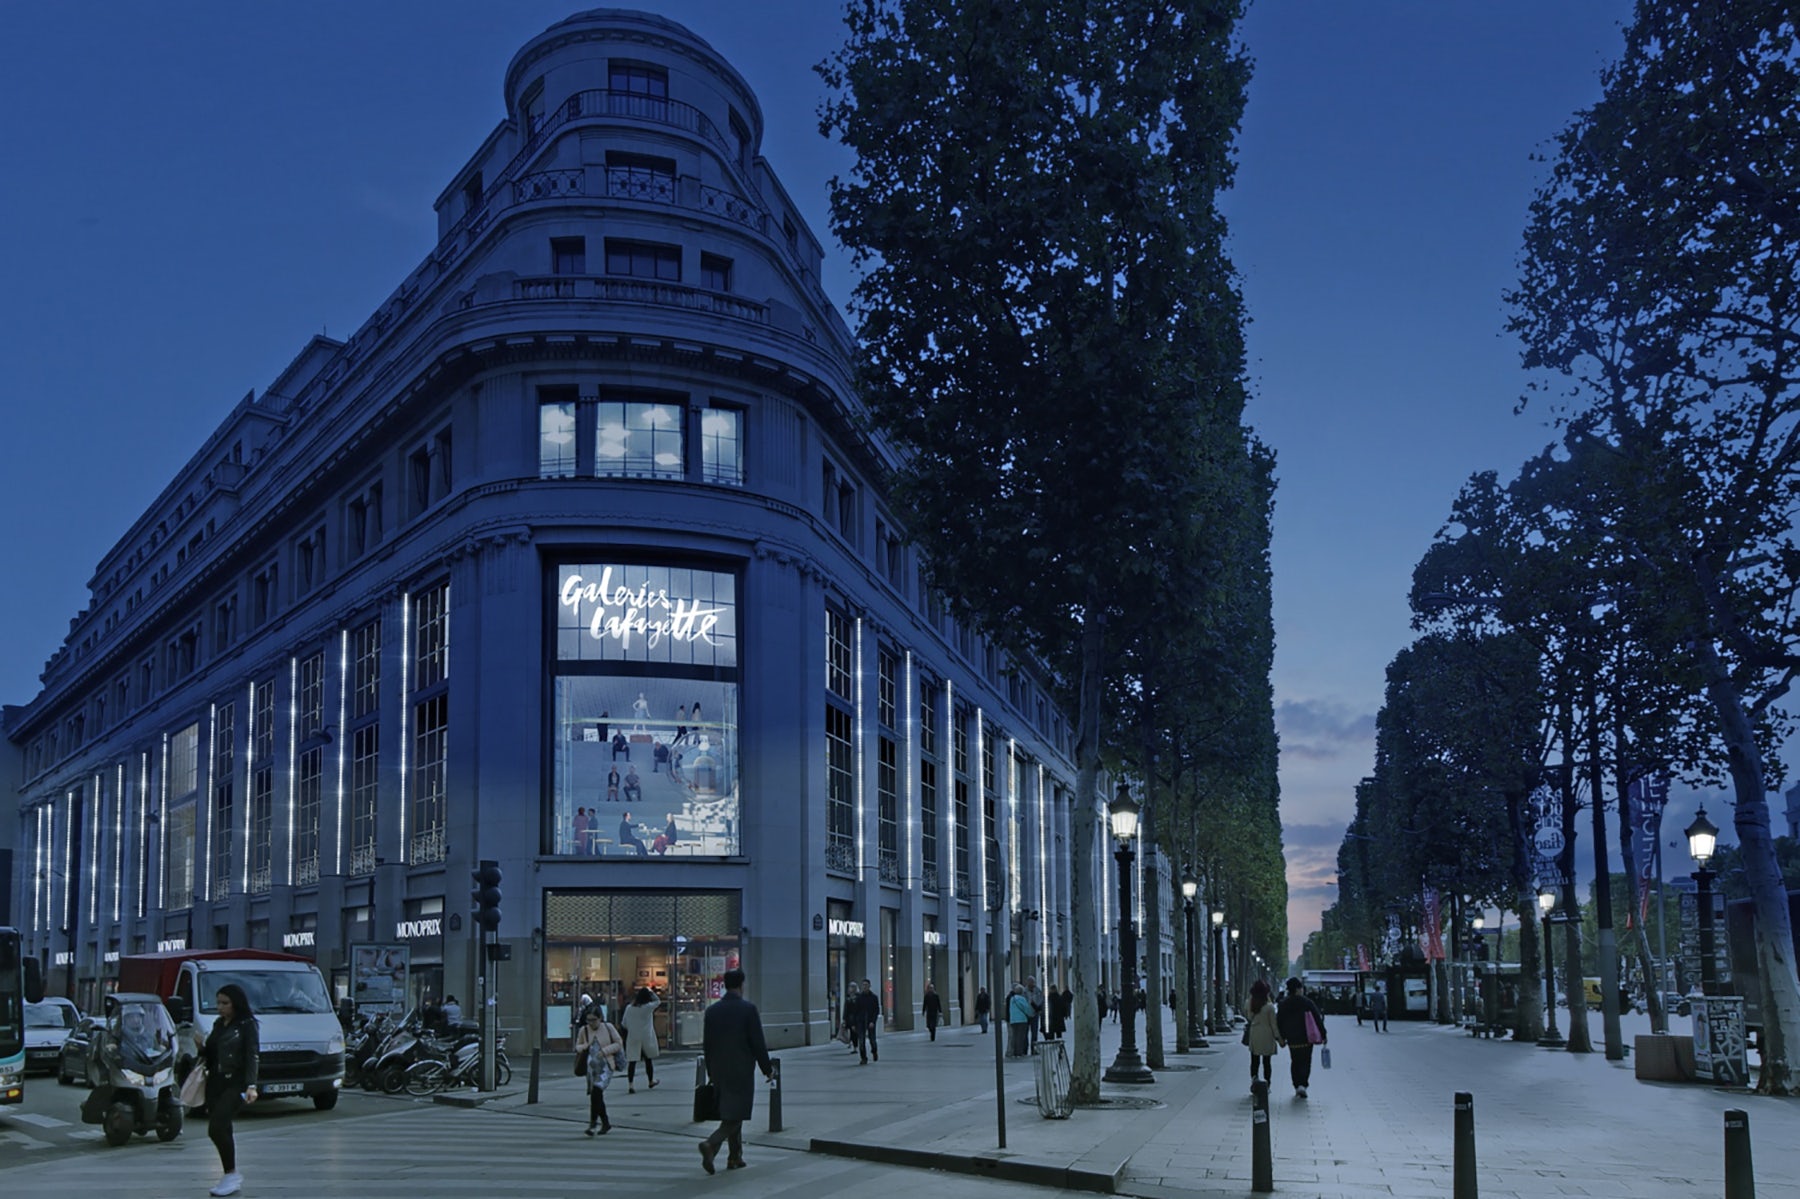 bjarke ingels group designs new flagship store for galeries lafayette